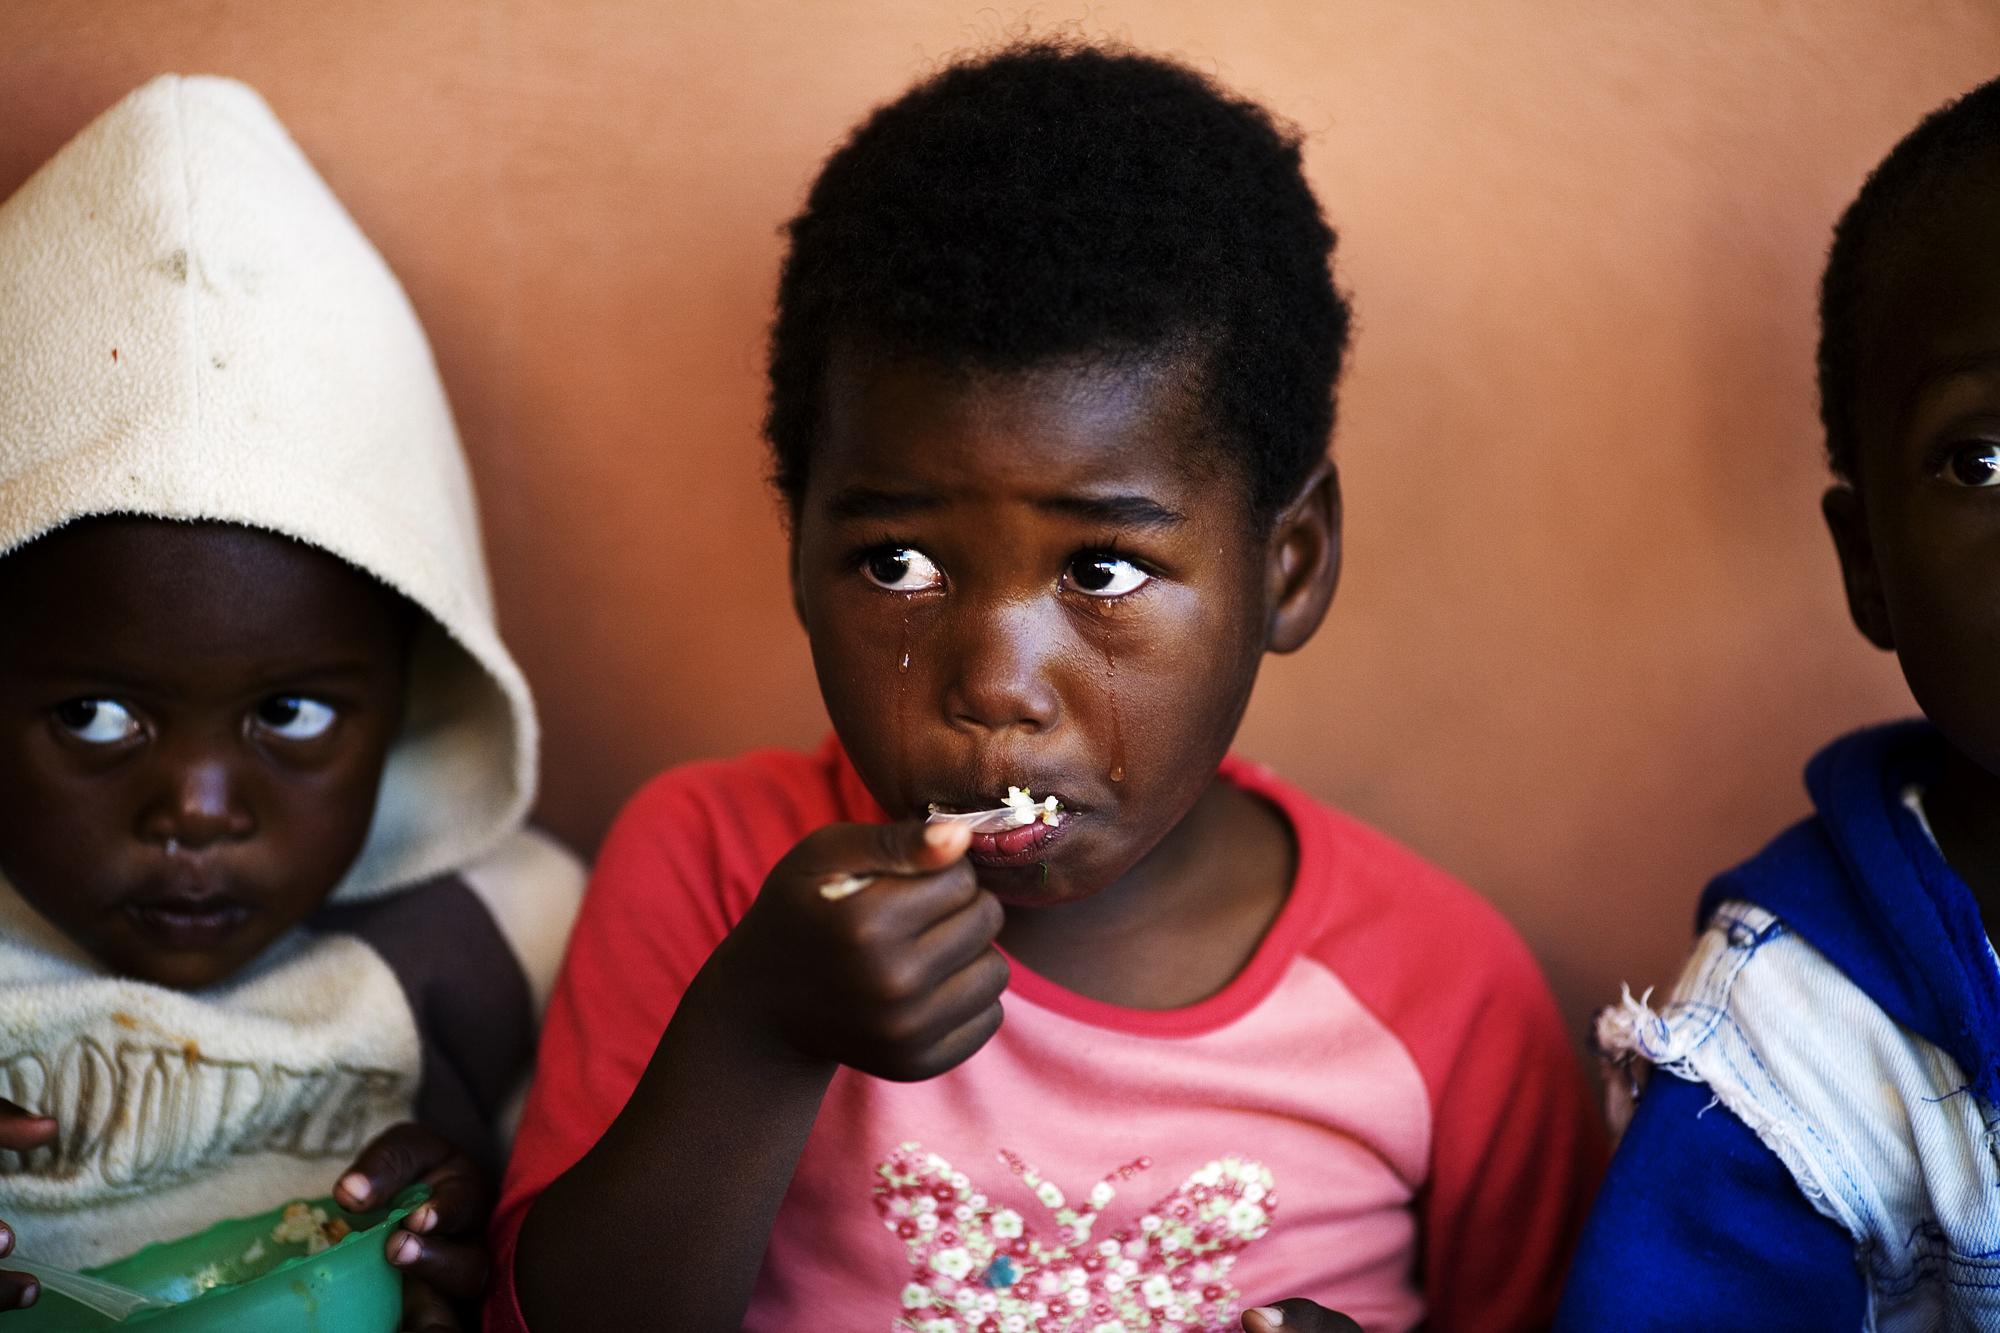 Mozambique - KWAZULU NATAL, ESHOWE, SOUTH AFRICA
Children at creche...